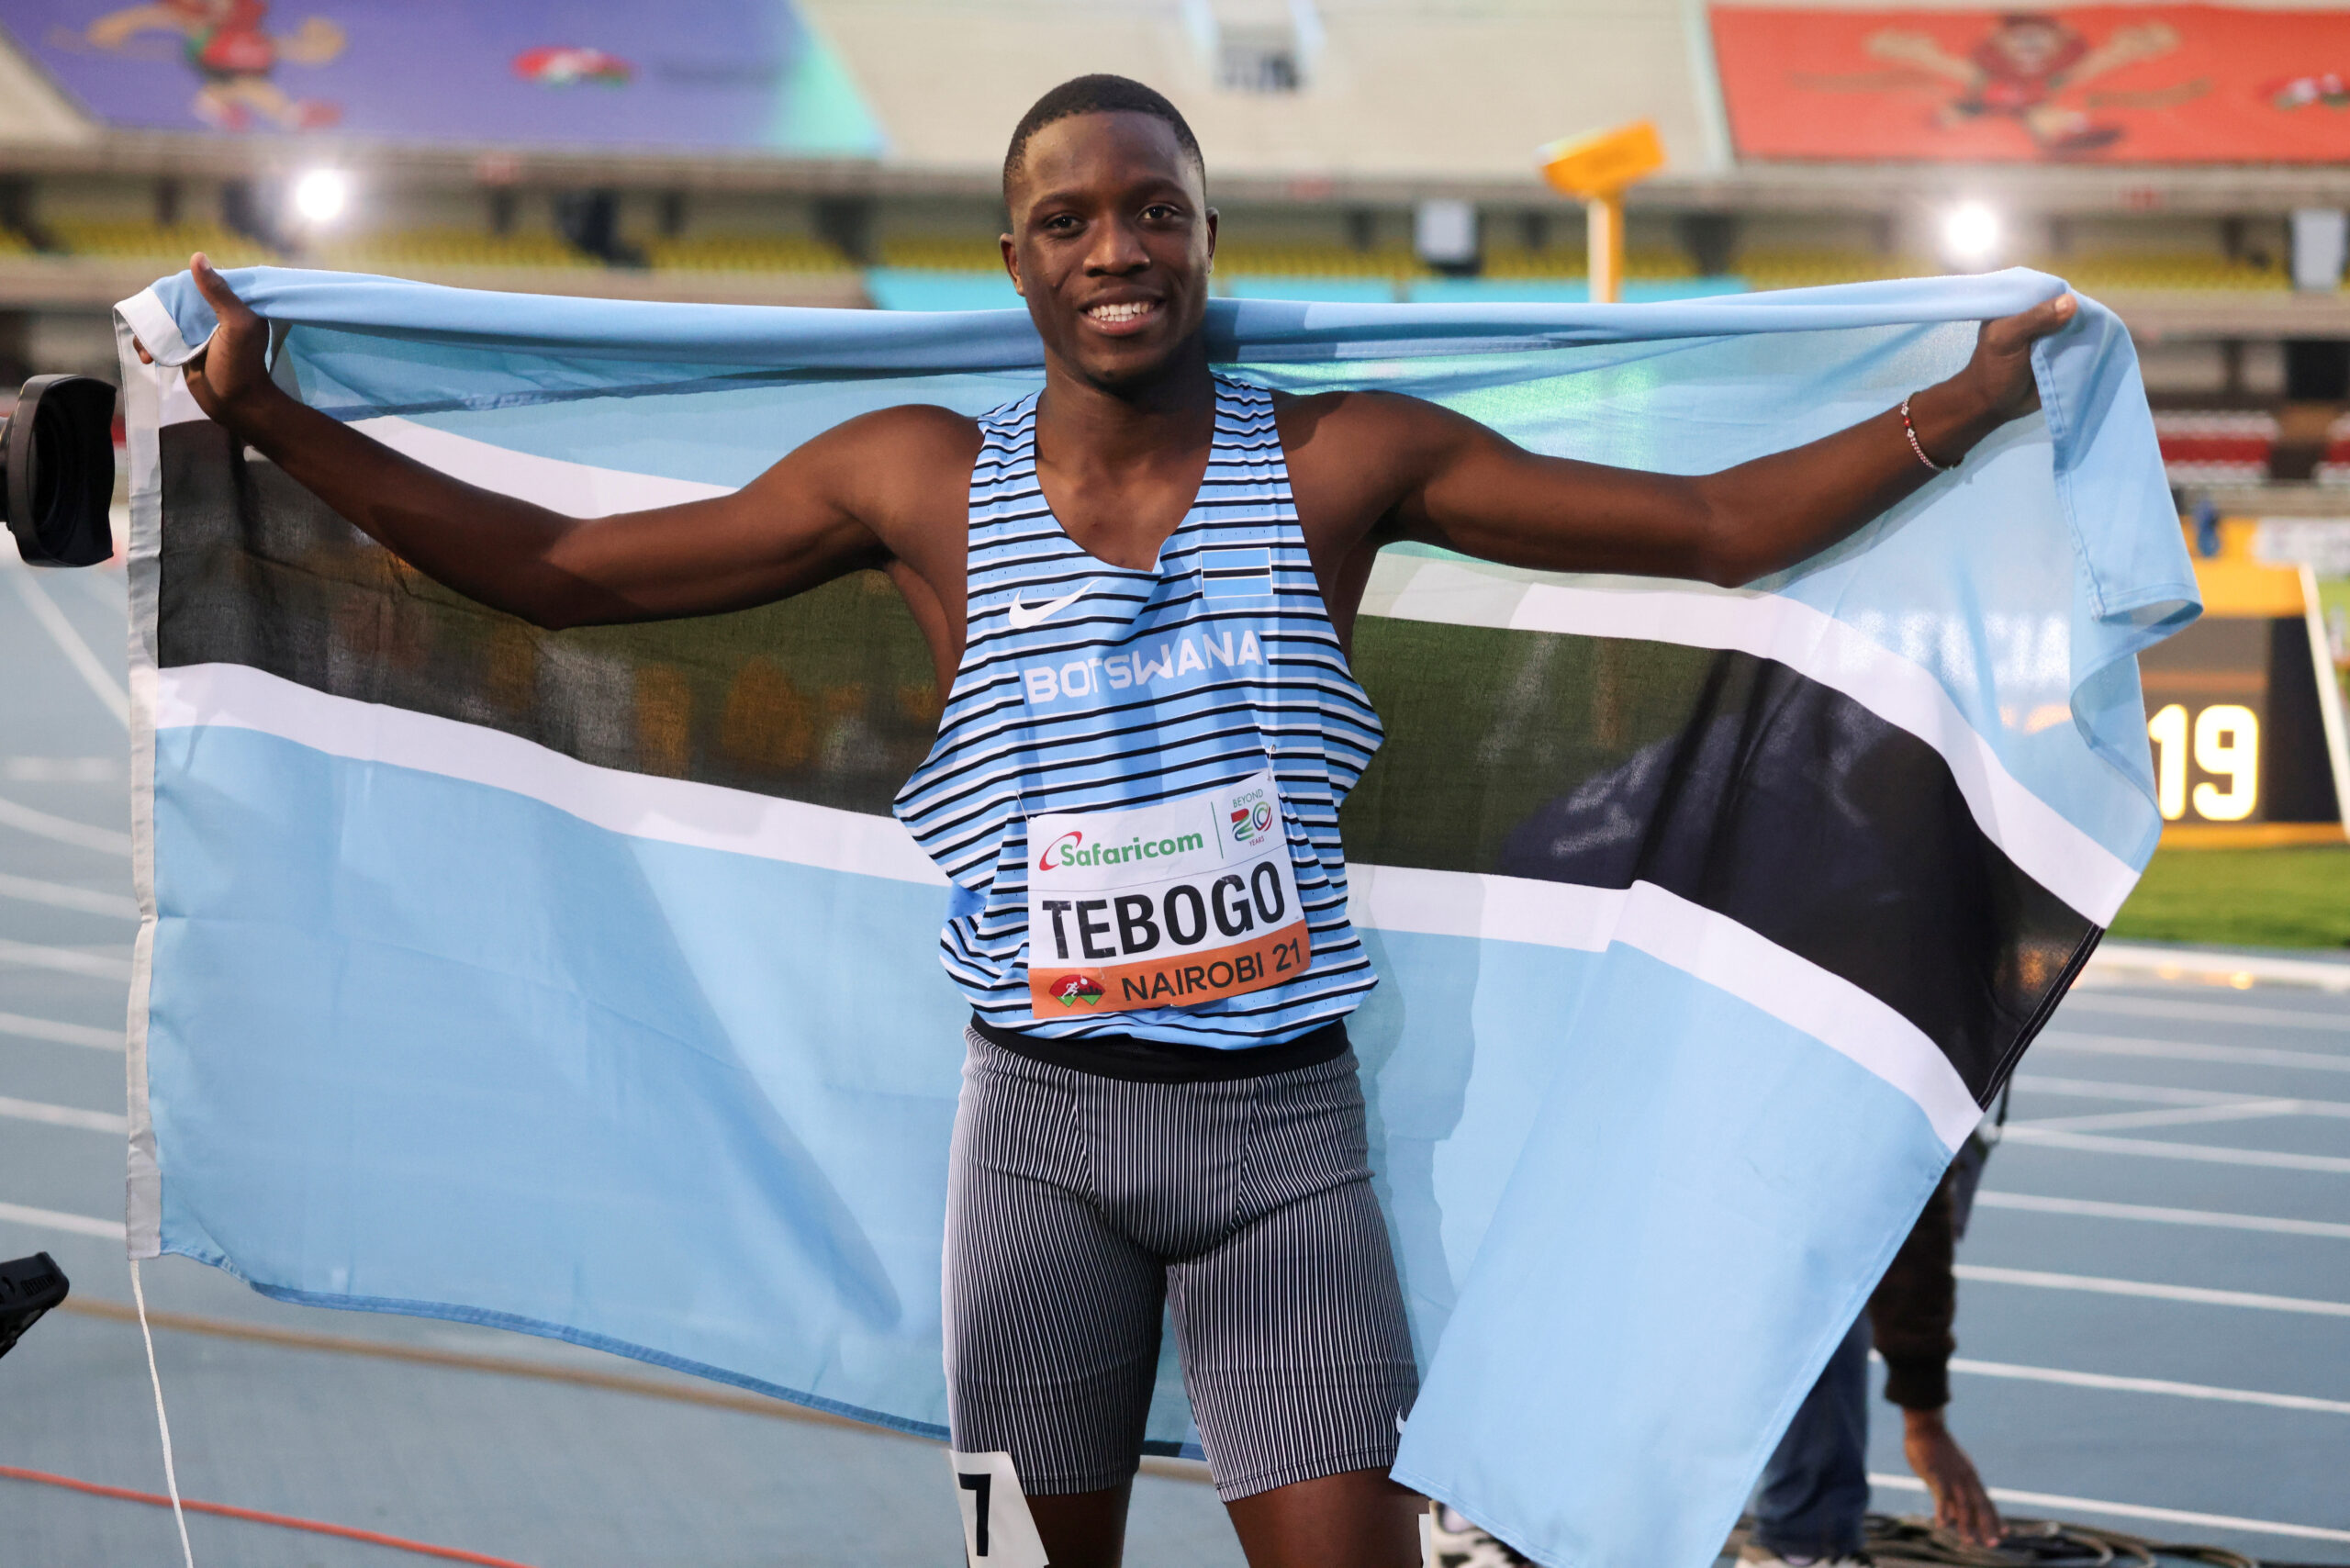 FILE PHOTO: Athletics - 2021 World Athletics U20 Championships - Botswana's Letsile Tebogo celebrates after winning gold at the Men's 100 meters final - Kasarani Stadium, Nairobi, Kenya - August 19, 2021.REUTERS/Baz Ratner